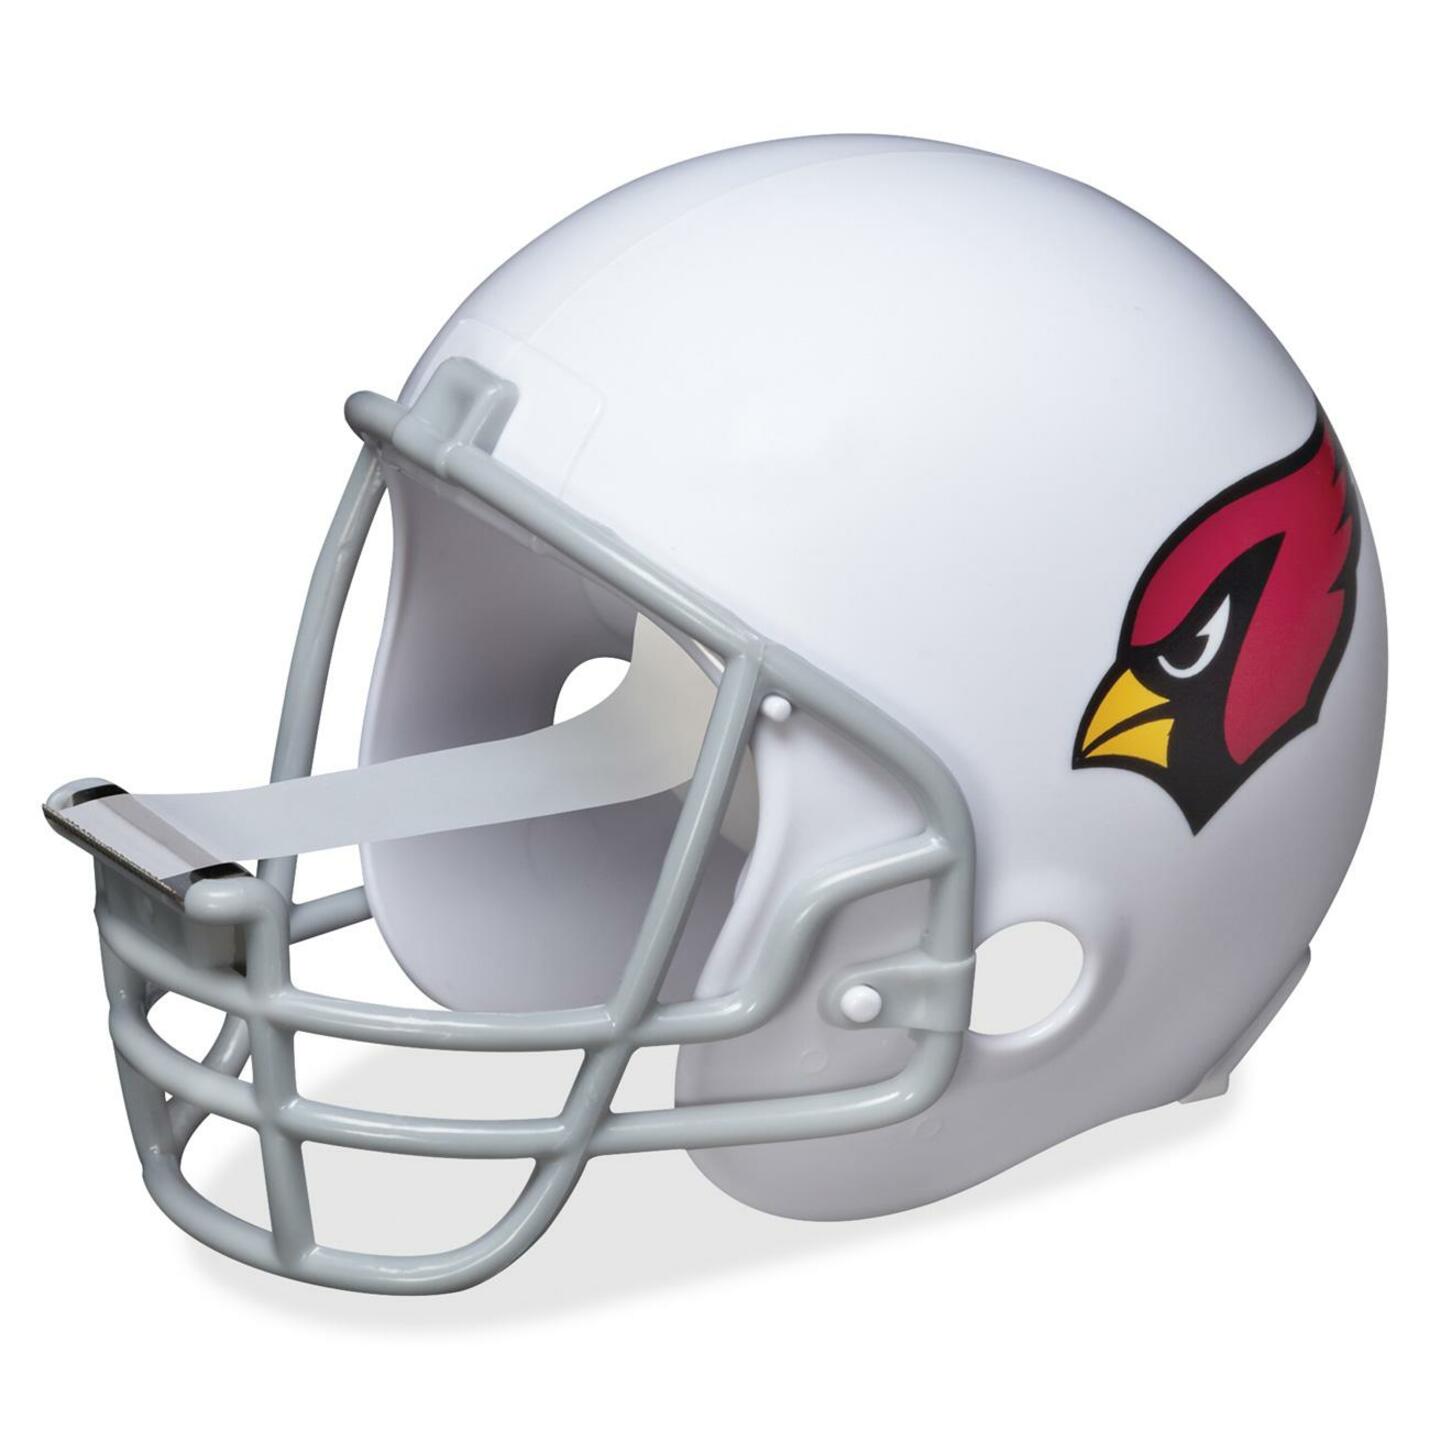 Scotch Magic Tape Dispenser, Arizona Cardinals Football Helmet - image 1 of 2